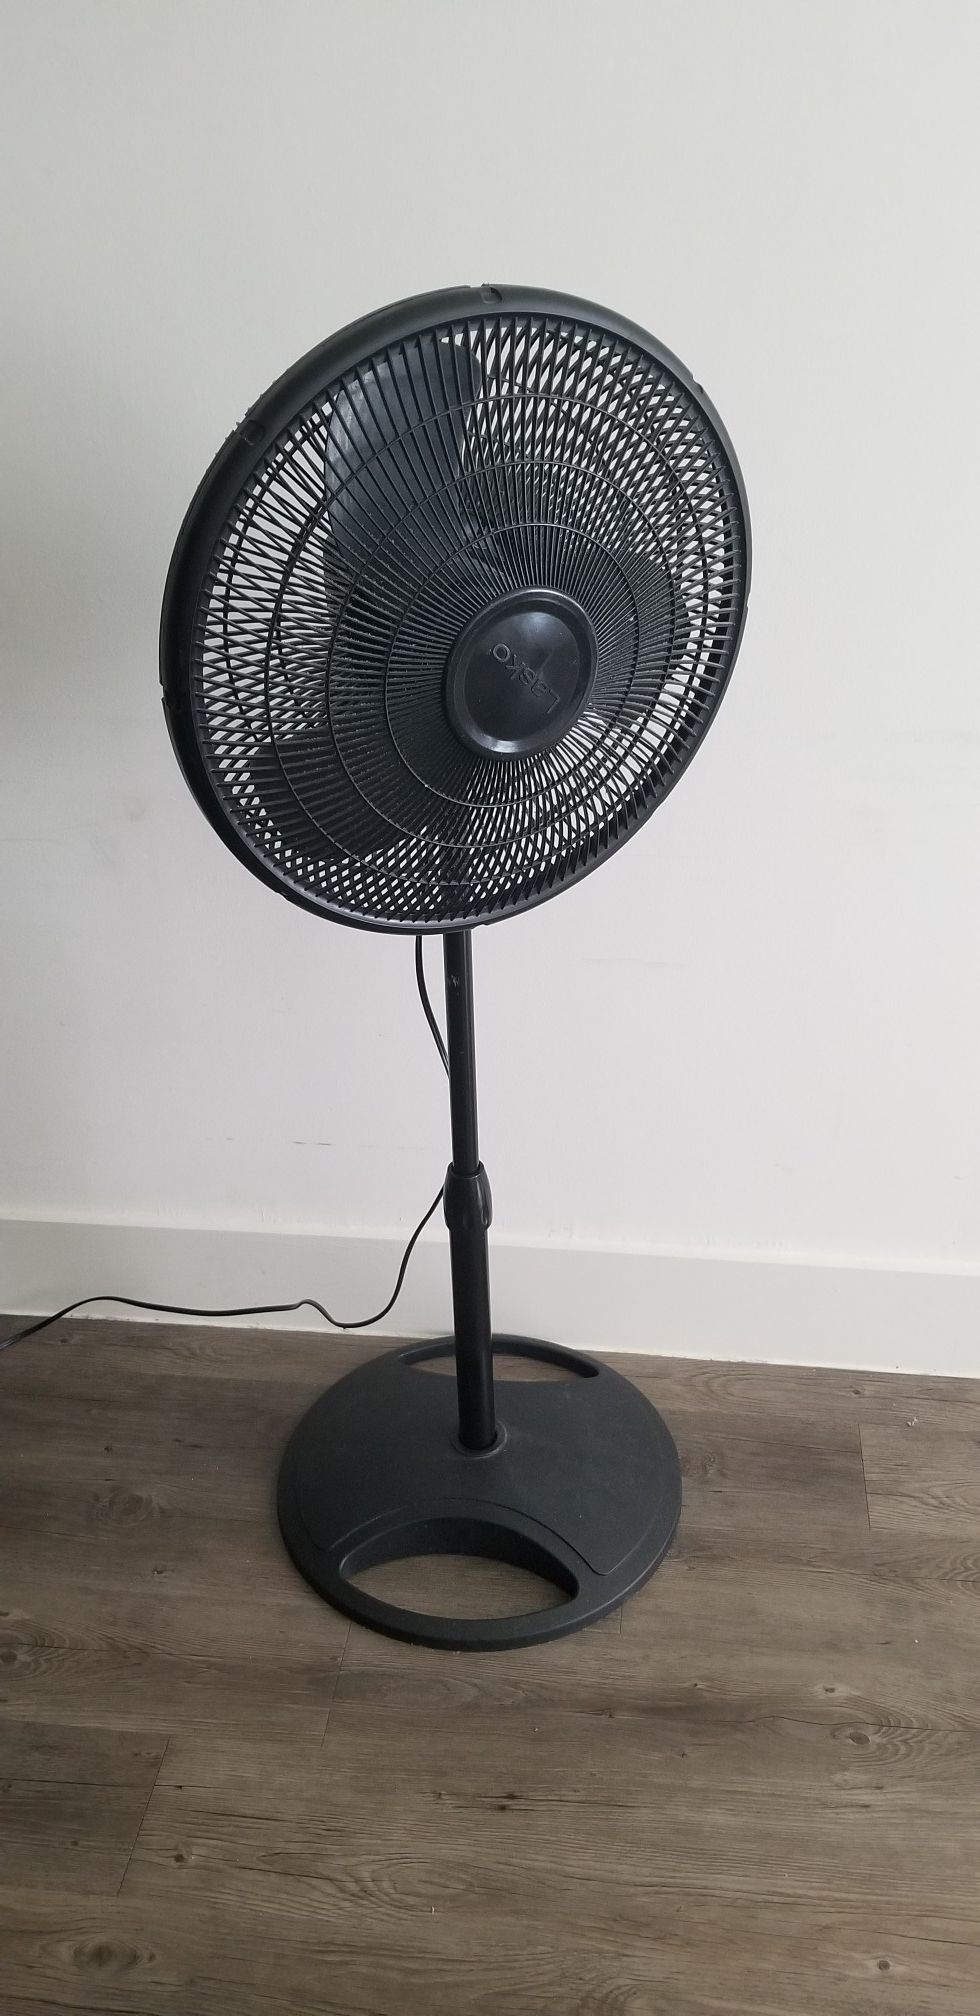 16" stand up plastic oscillating fan 3 speeds. Light, sturdy, about 4 feet tall